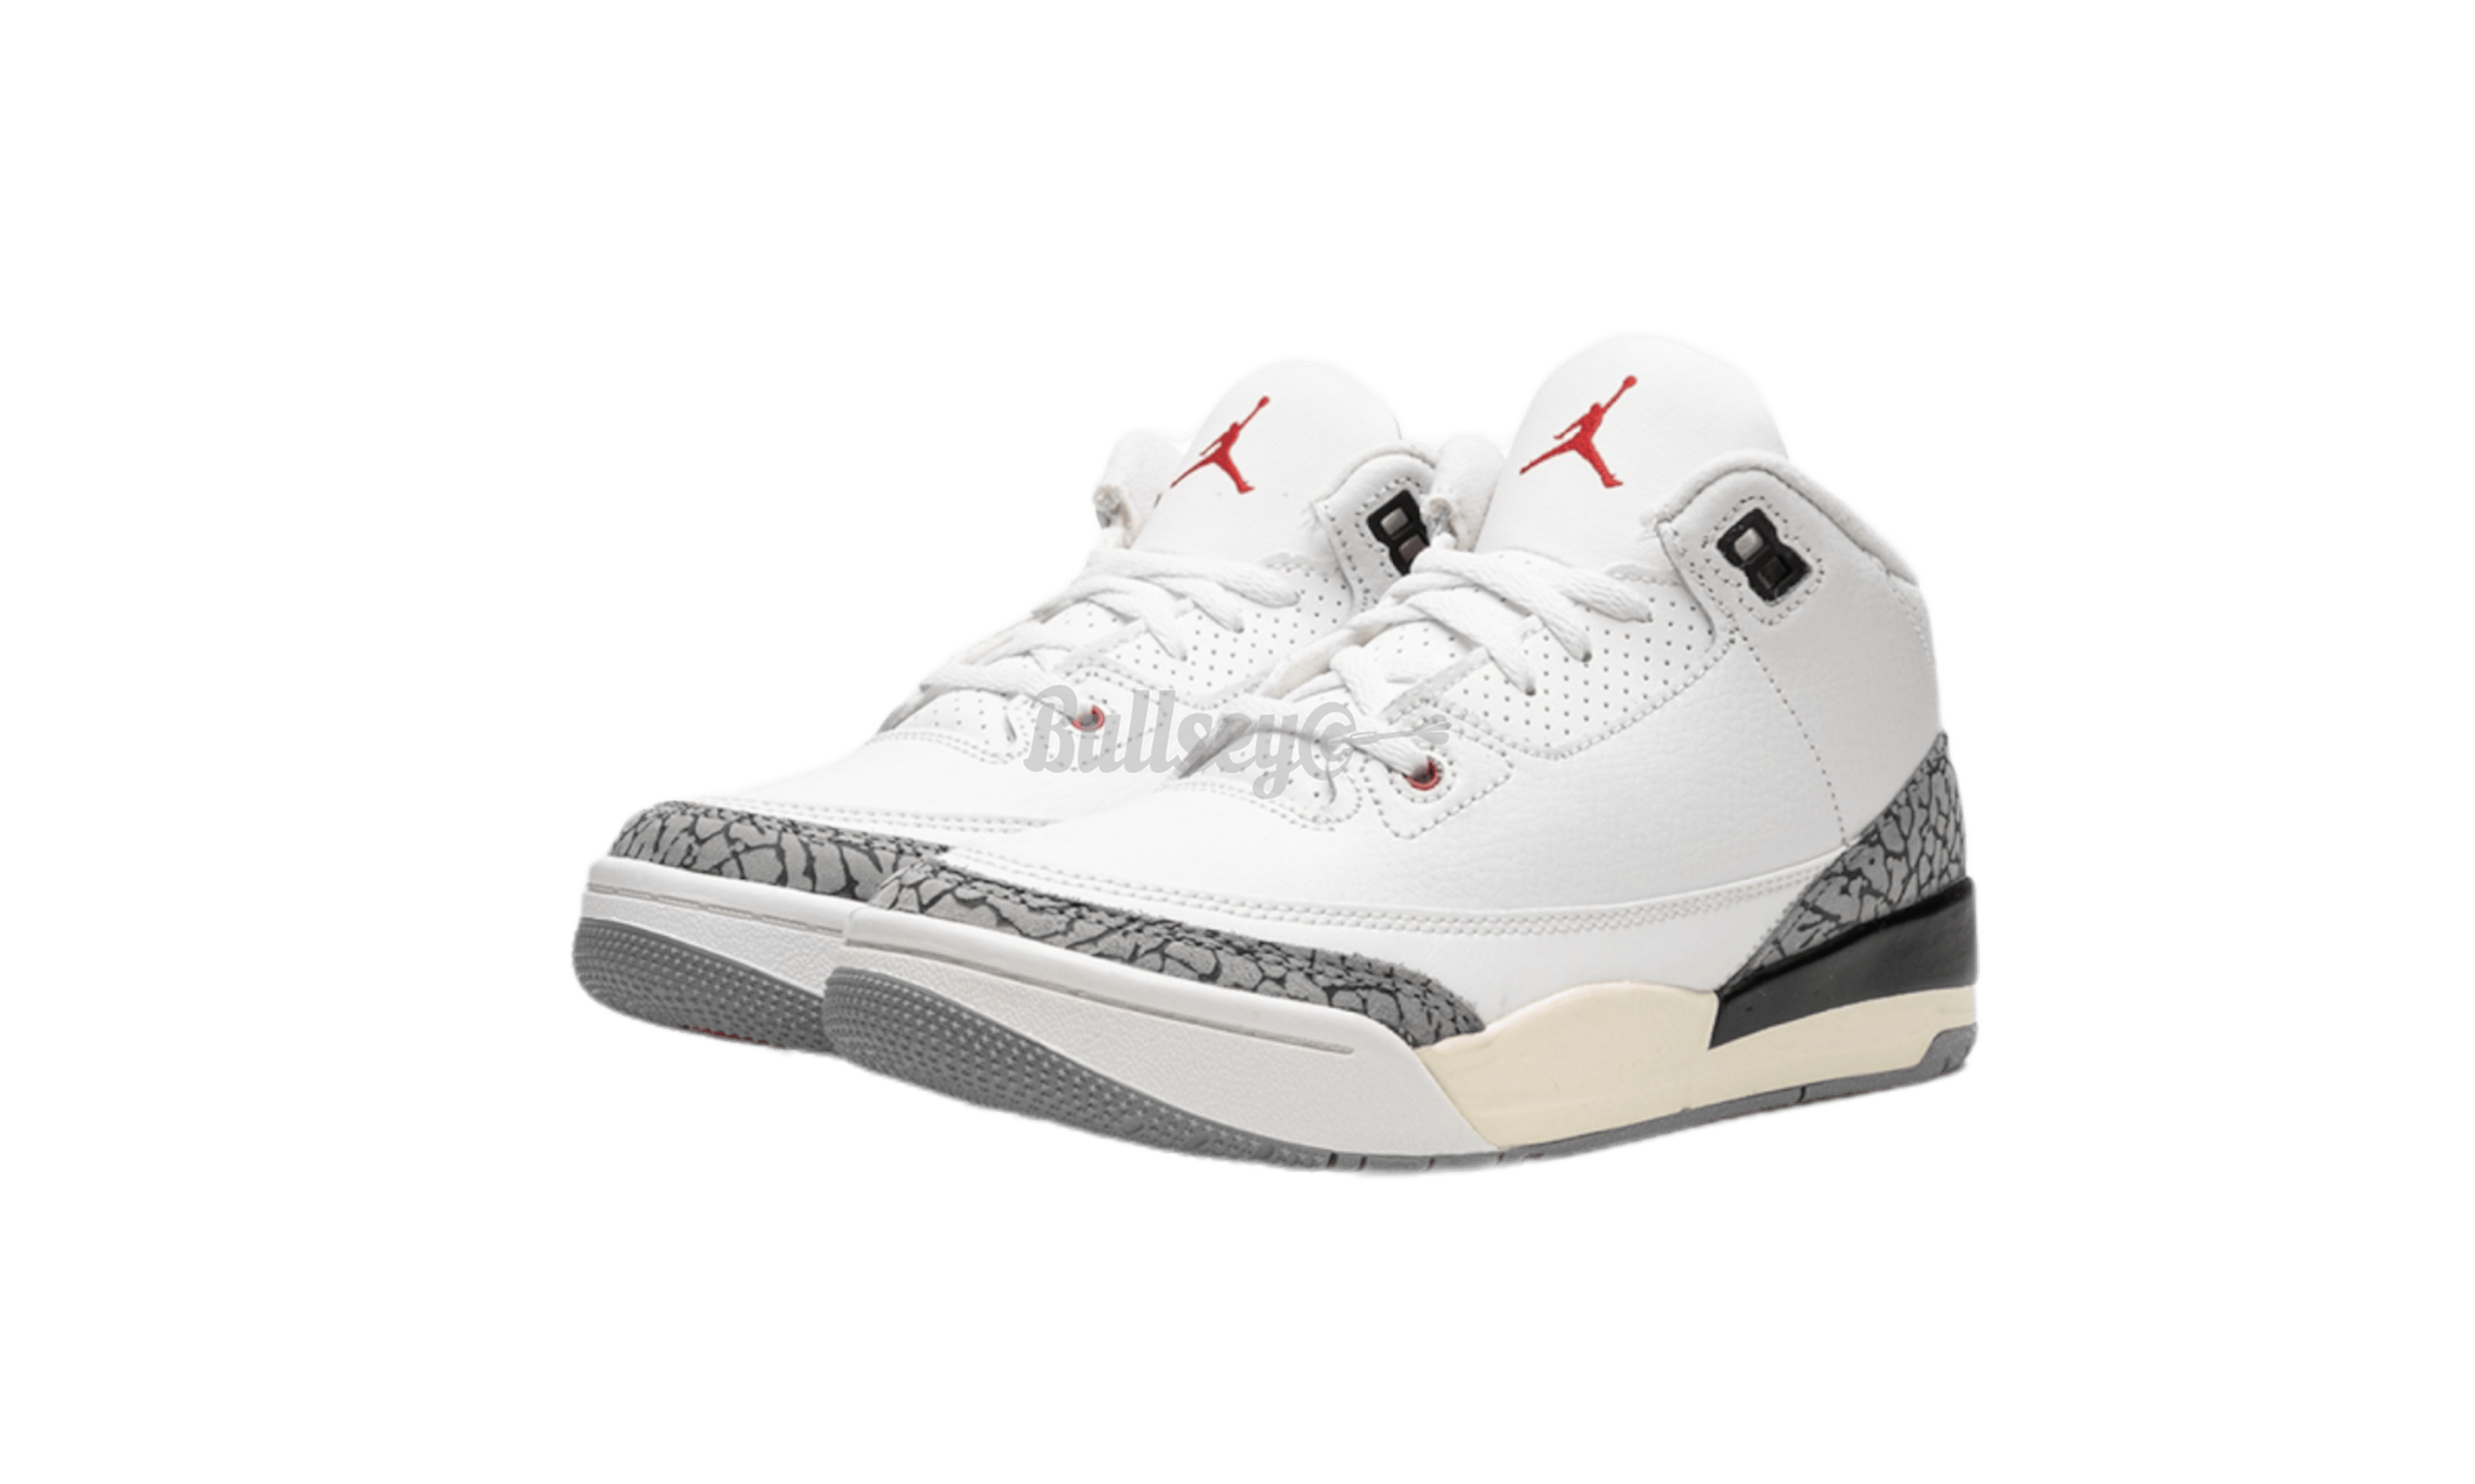 Alternate View 1 of Air Jordan 3 Retro "White Cement Reimagined" Pre-School